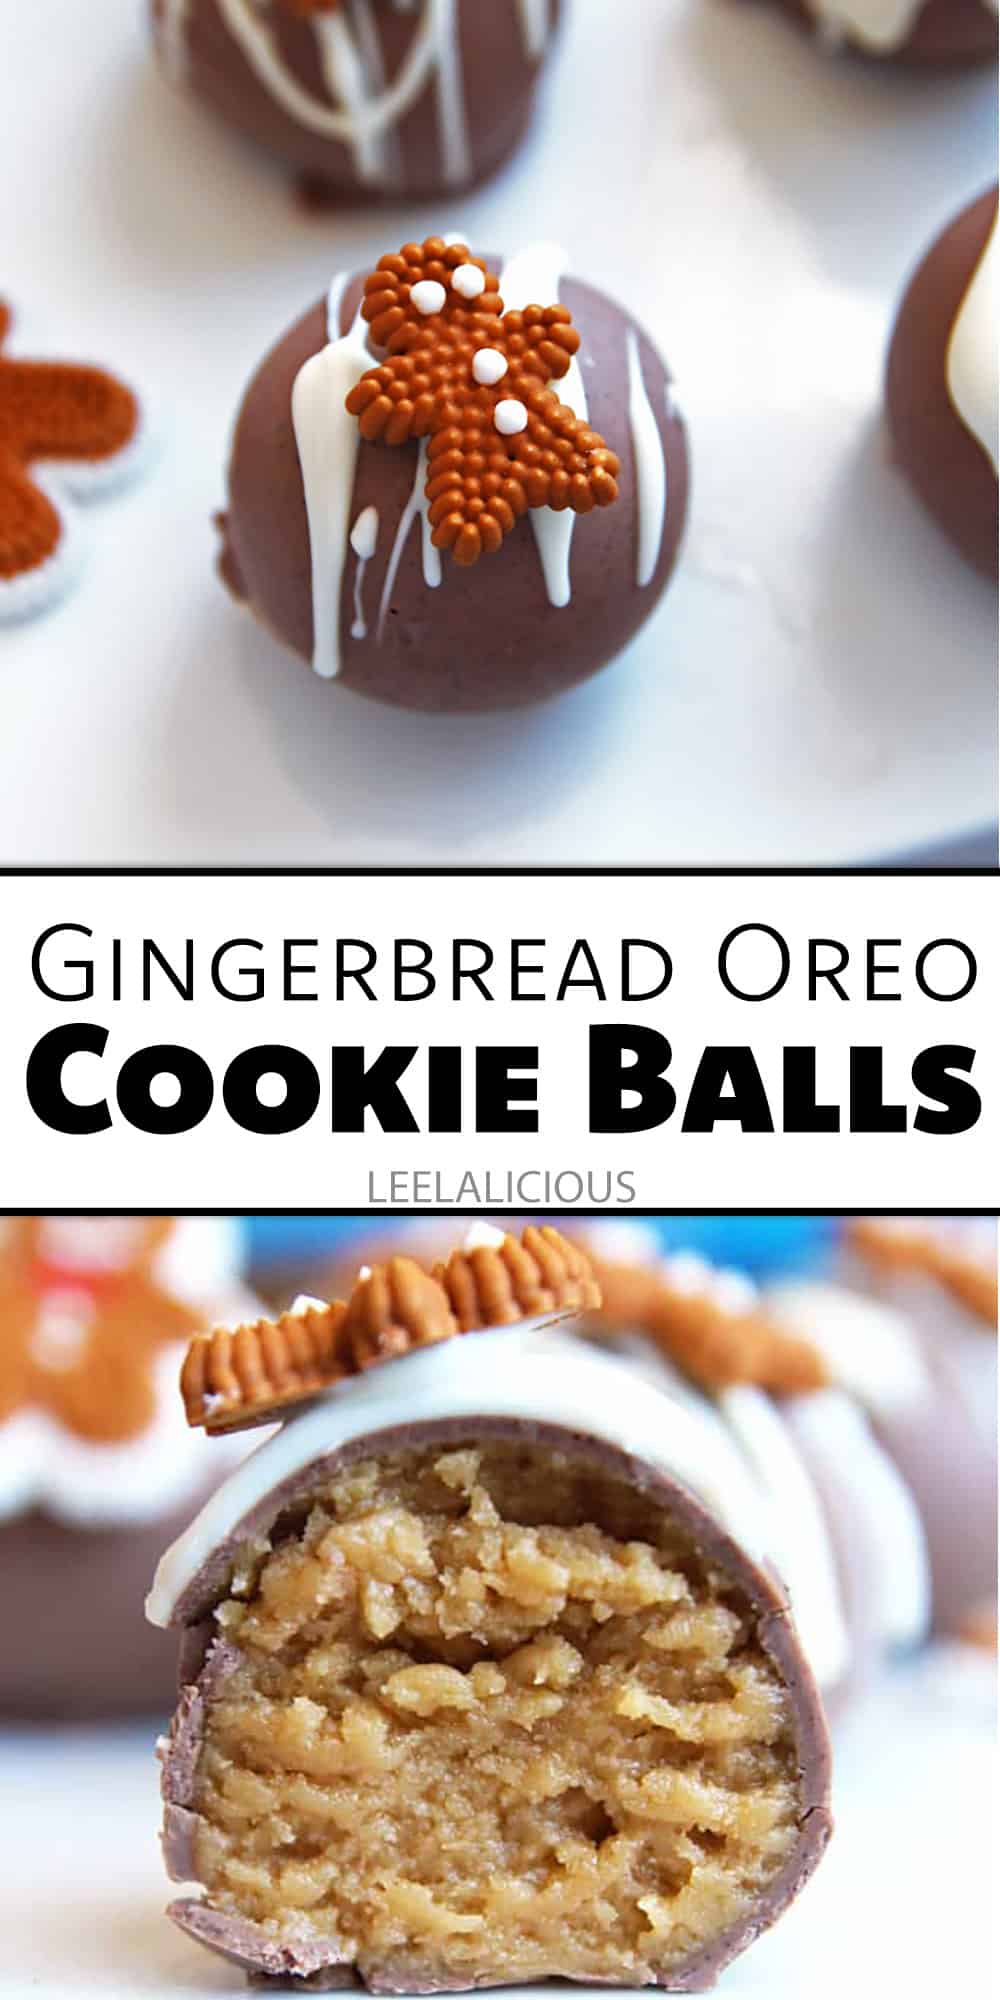 Gingerbread Oreo Cookie Balls